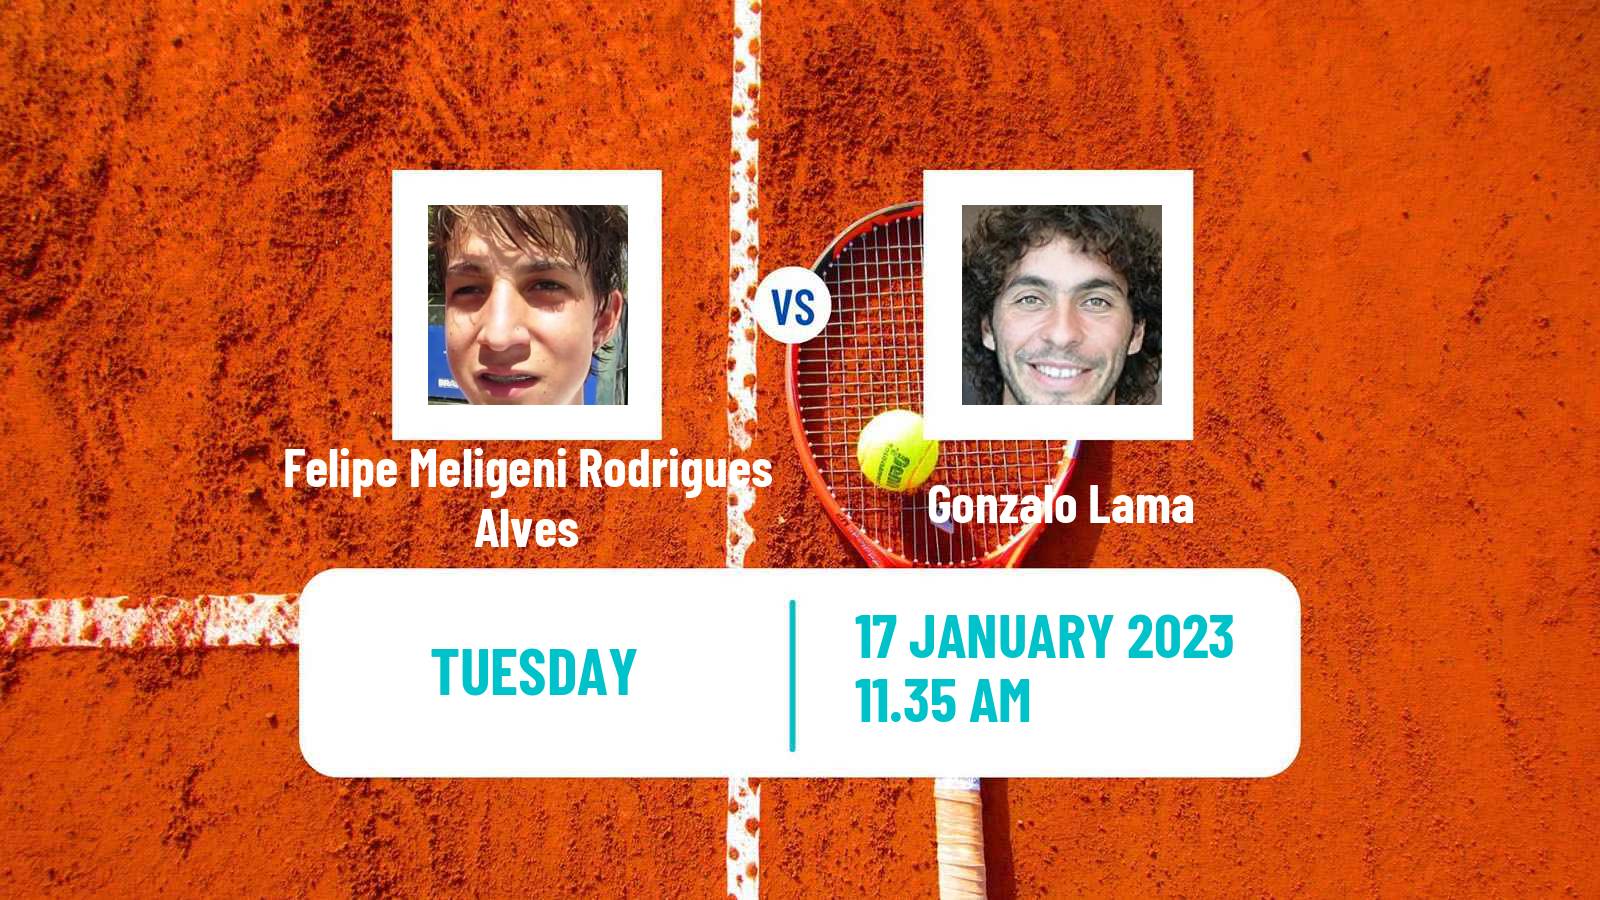 Tennis ATP Challenger Felipe Meligeni Rodrigues Alves - Gonzalo Lama